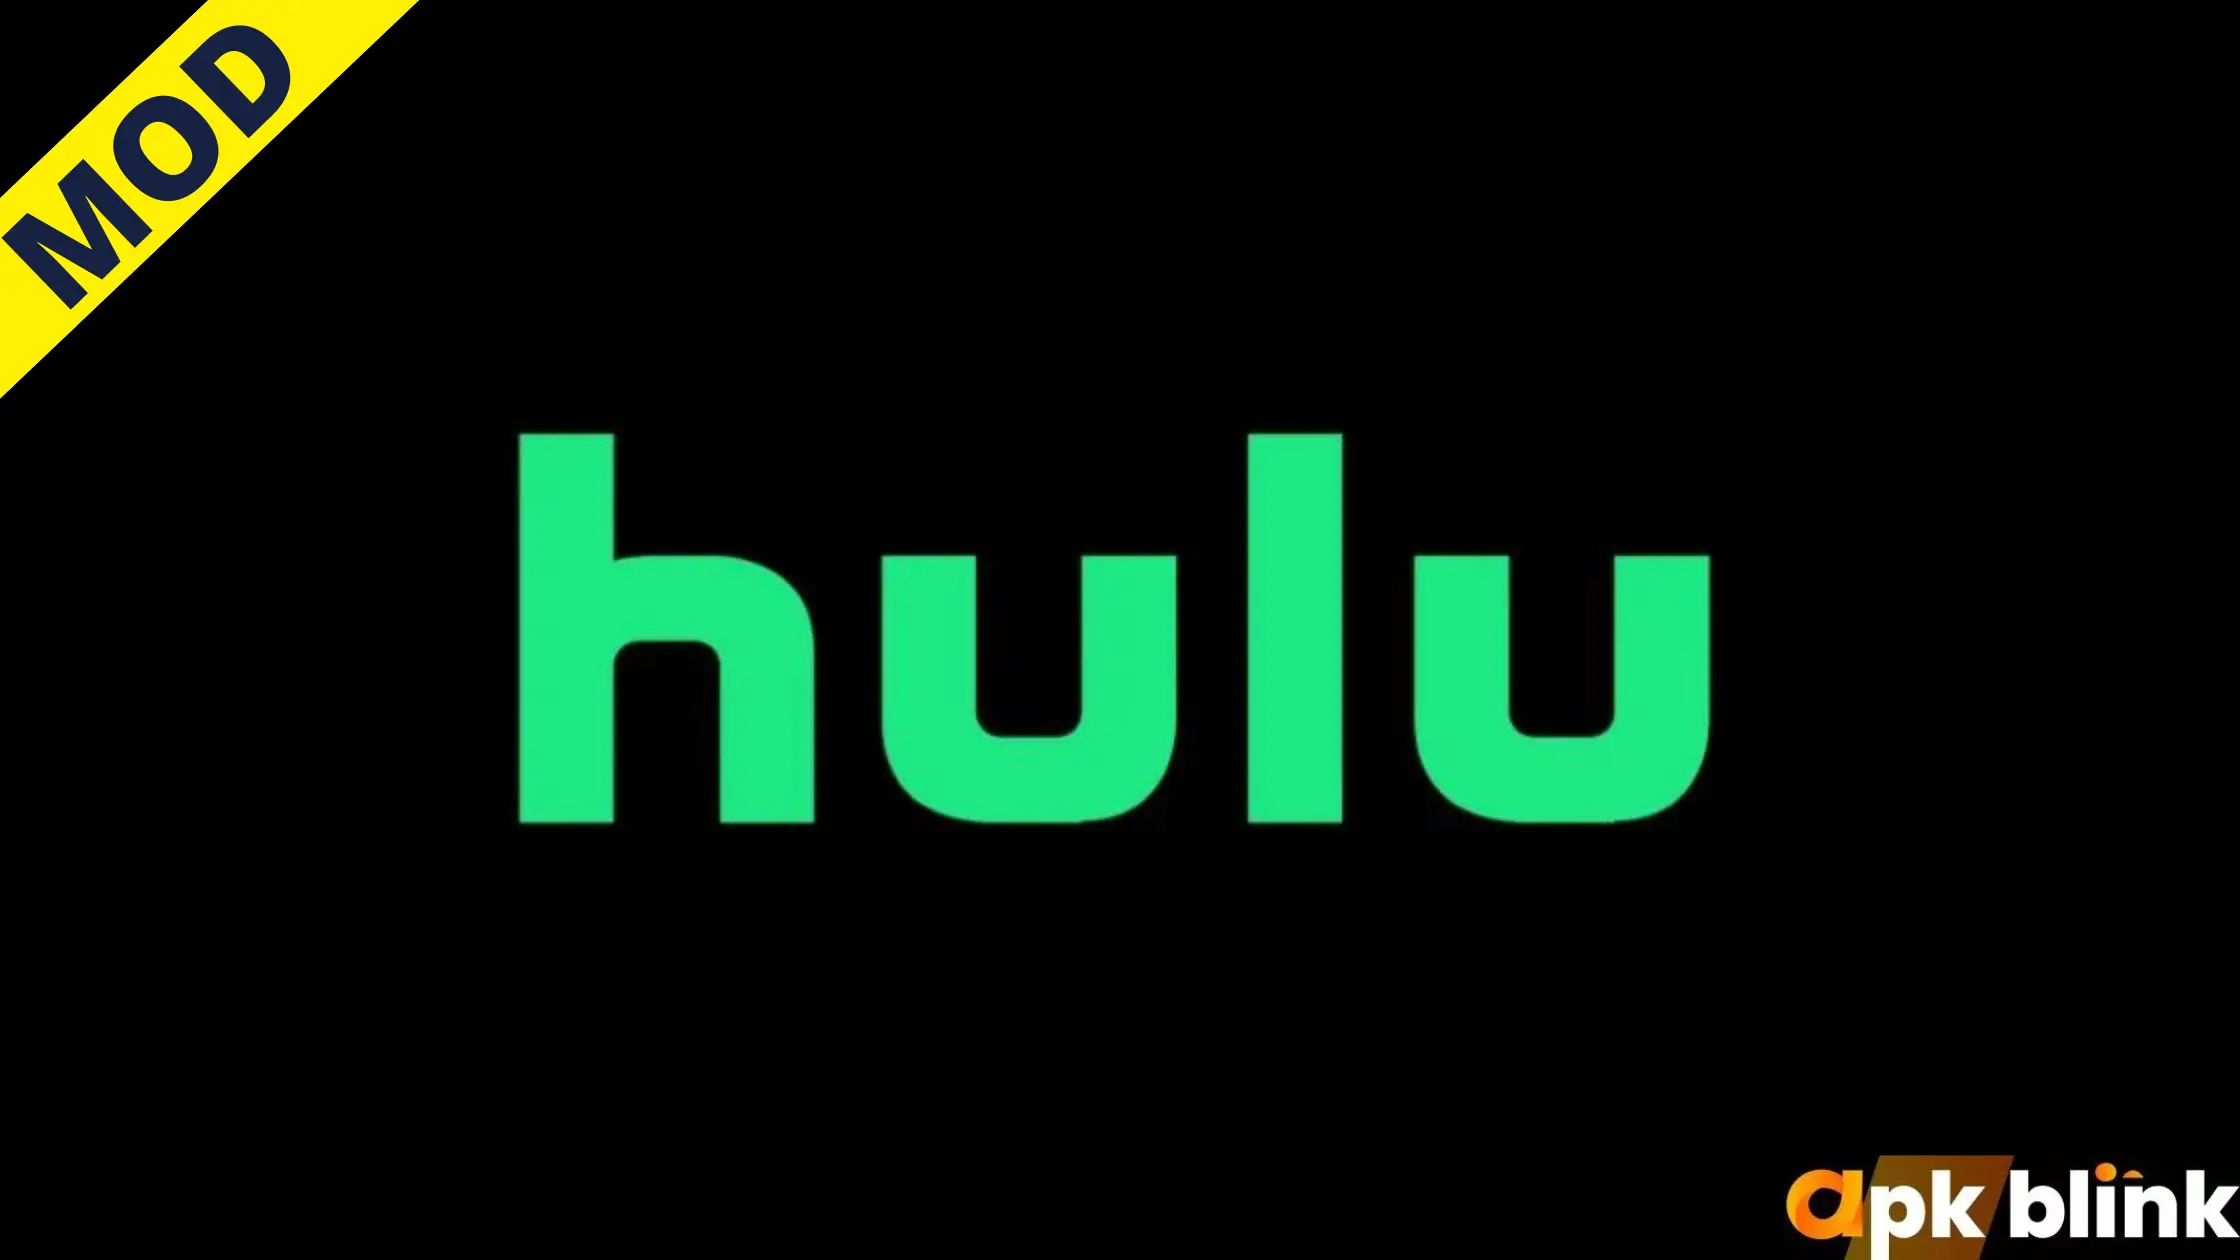 Hulu Mod APK